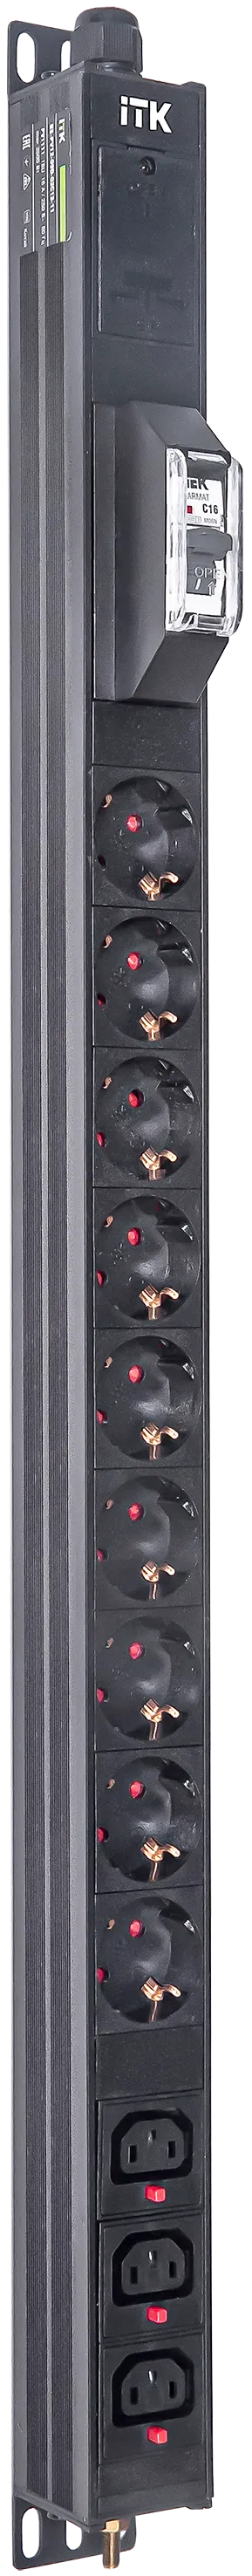 ITK BASE PDU вертикальный PV1111 18U 1 фаза 16А 9 розеток SCHUKO (немецкий стандарт) + 3 розетки C13 кабель 2,6м вилка SCHUKO (немецкий стандарт)